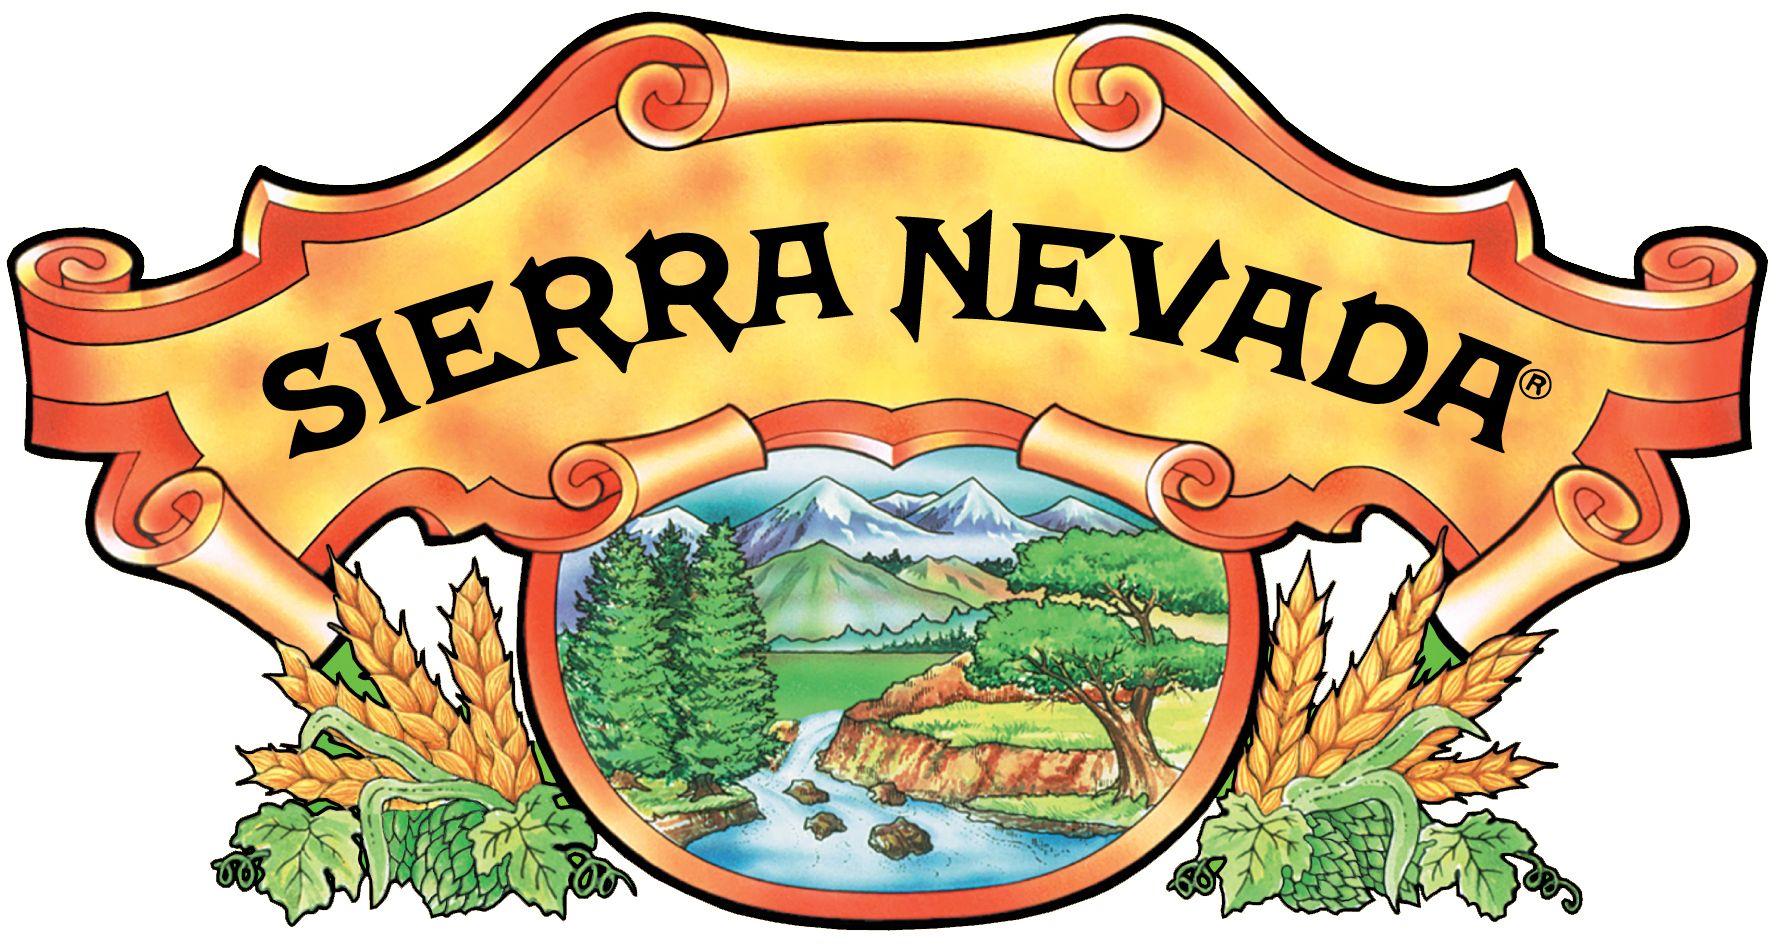 Sierra Nevada Brewery Logo - Sierra Nevada Finds Rich Water Source | Independent Beers